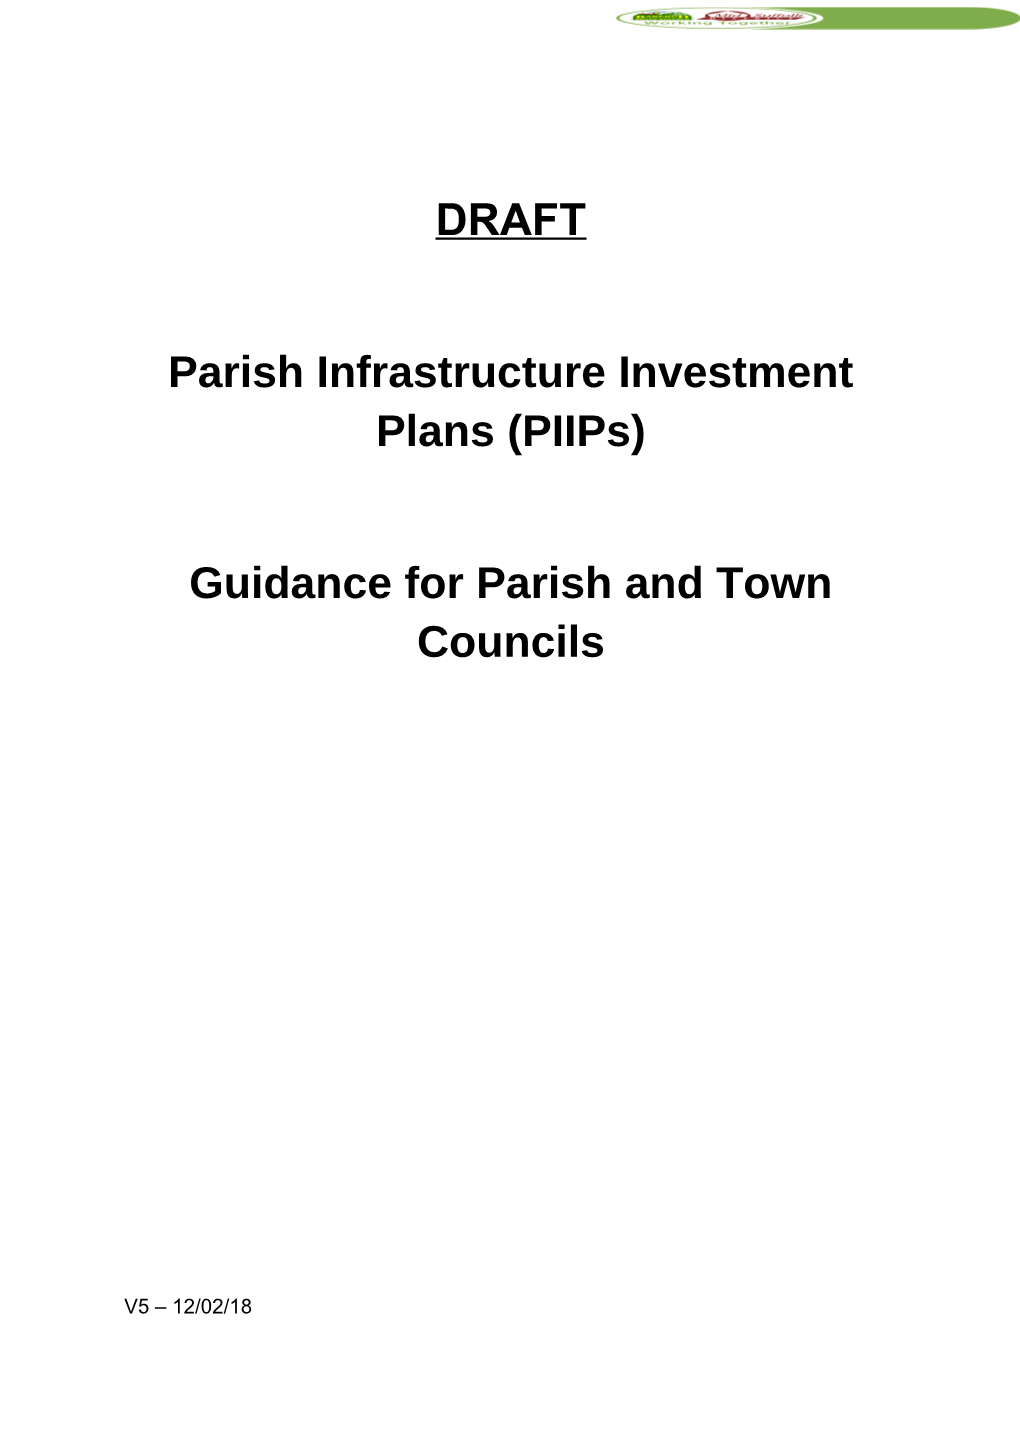 Parish Infrastructure Investment Plans (Piips)